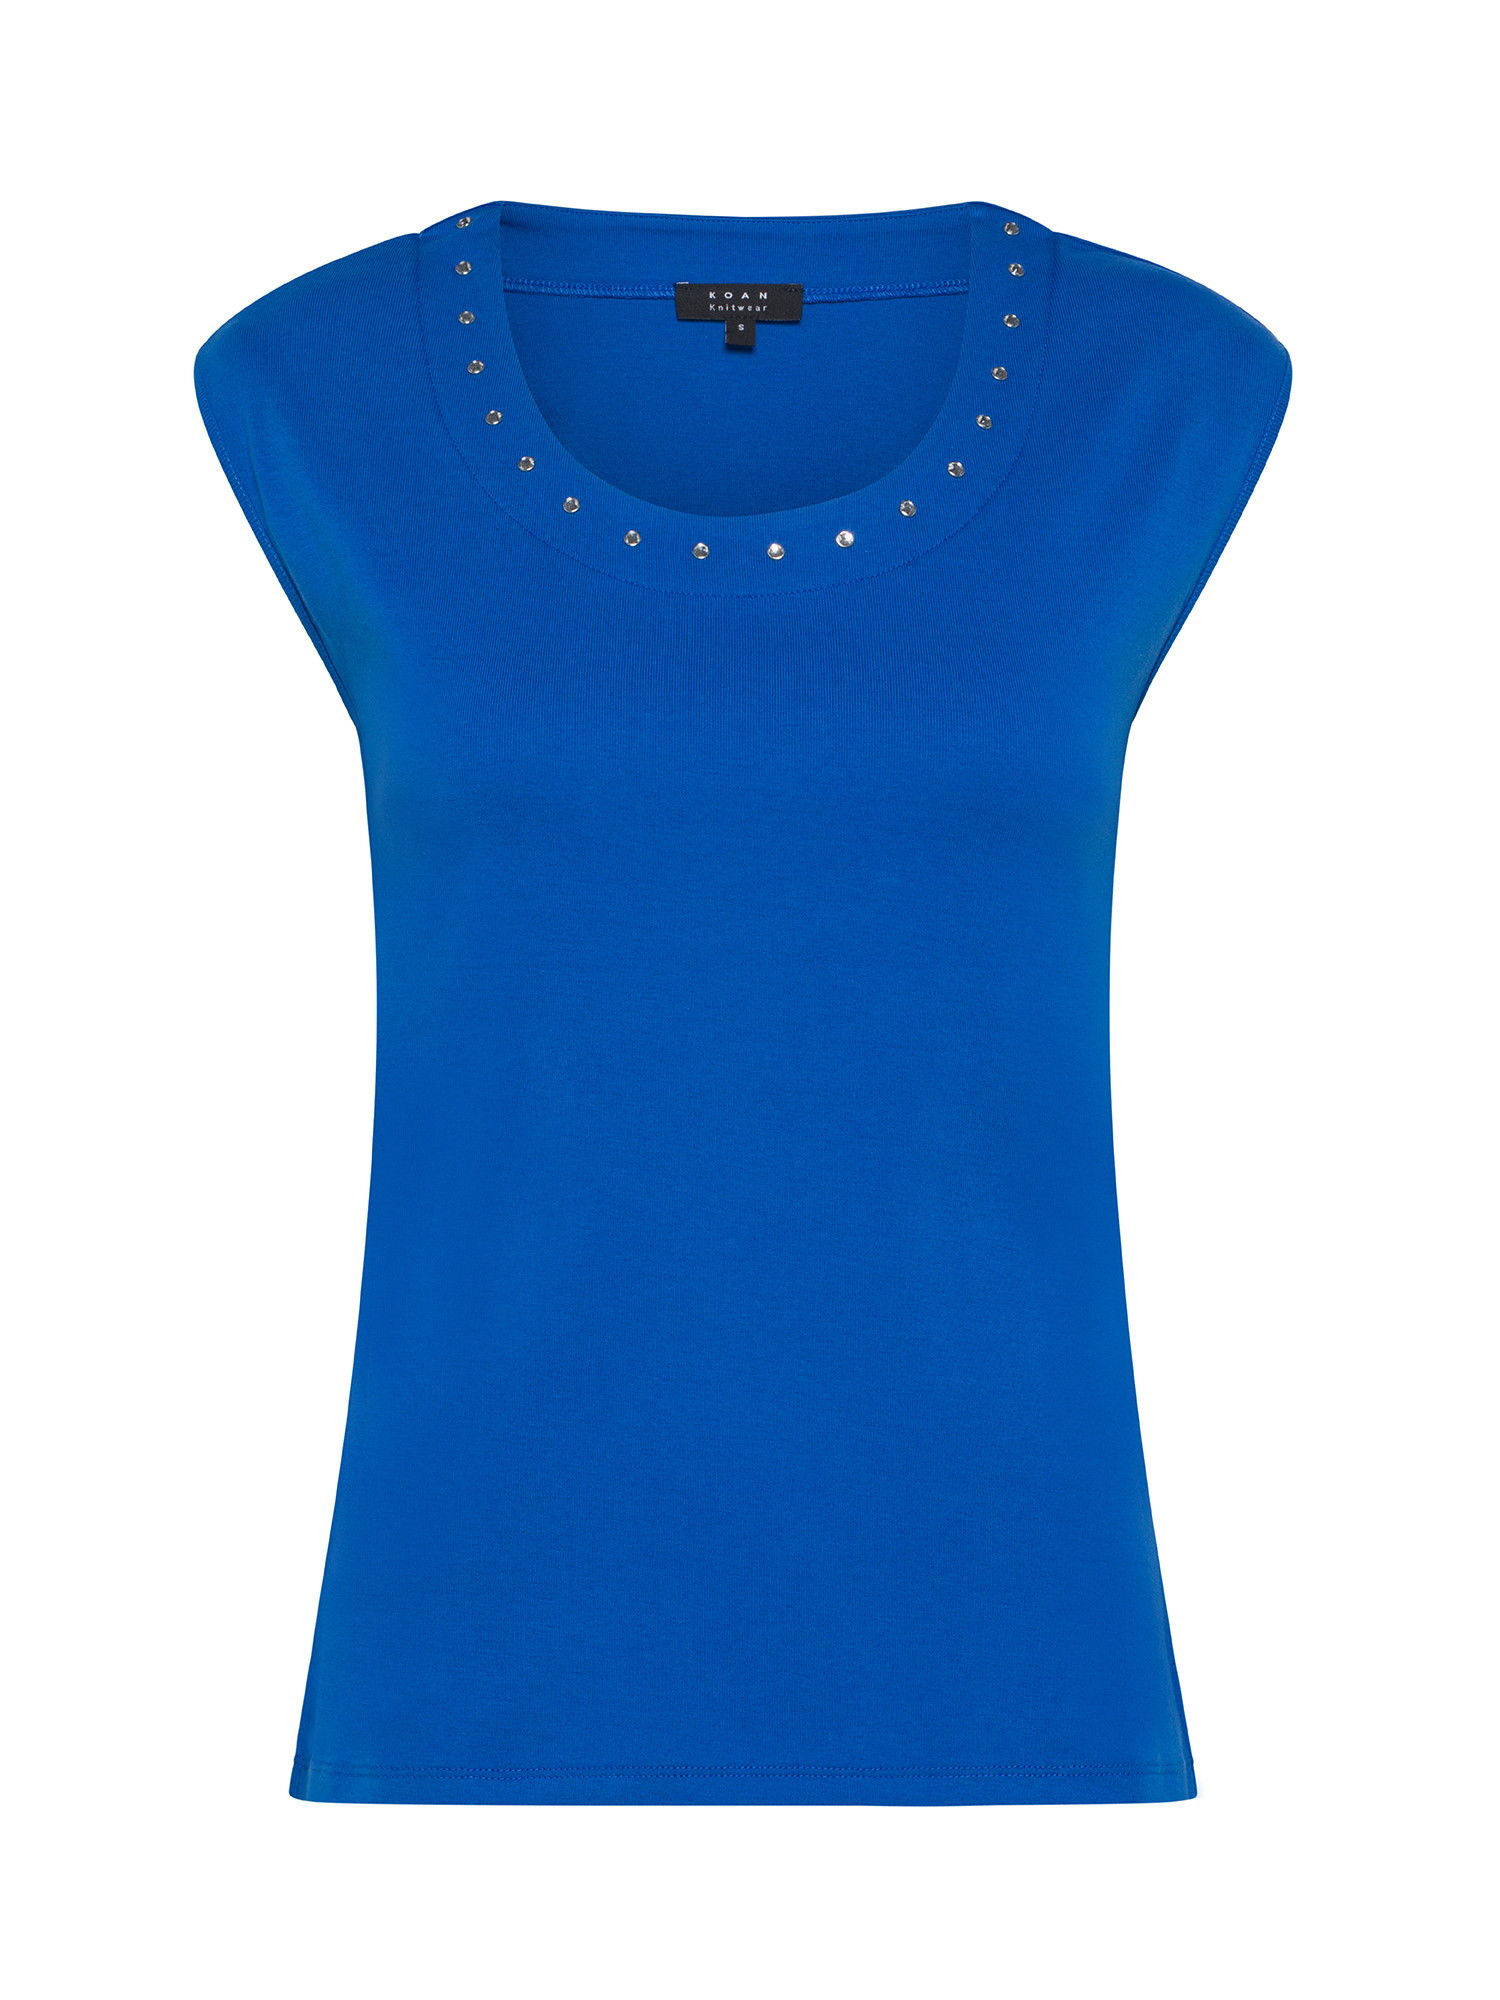 Koan - T-shirt in cotone con borchiette, Blu royal, large image number 0